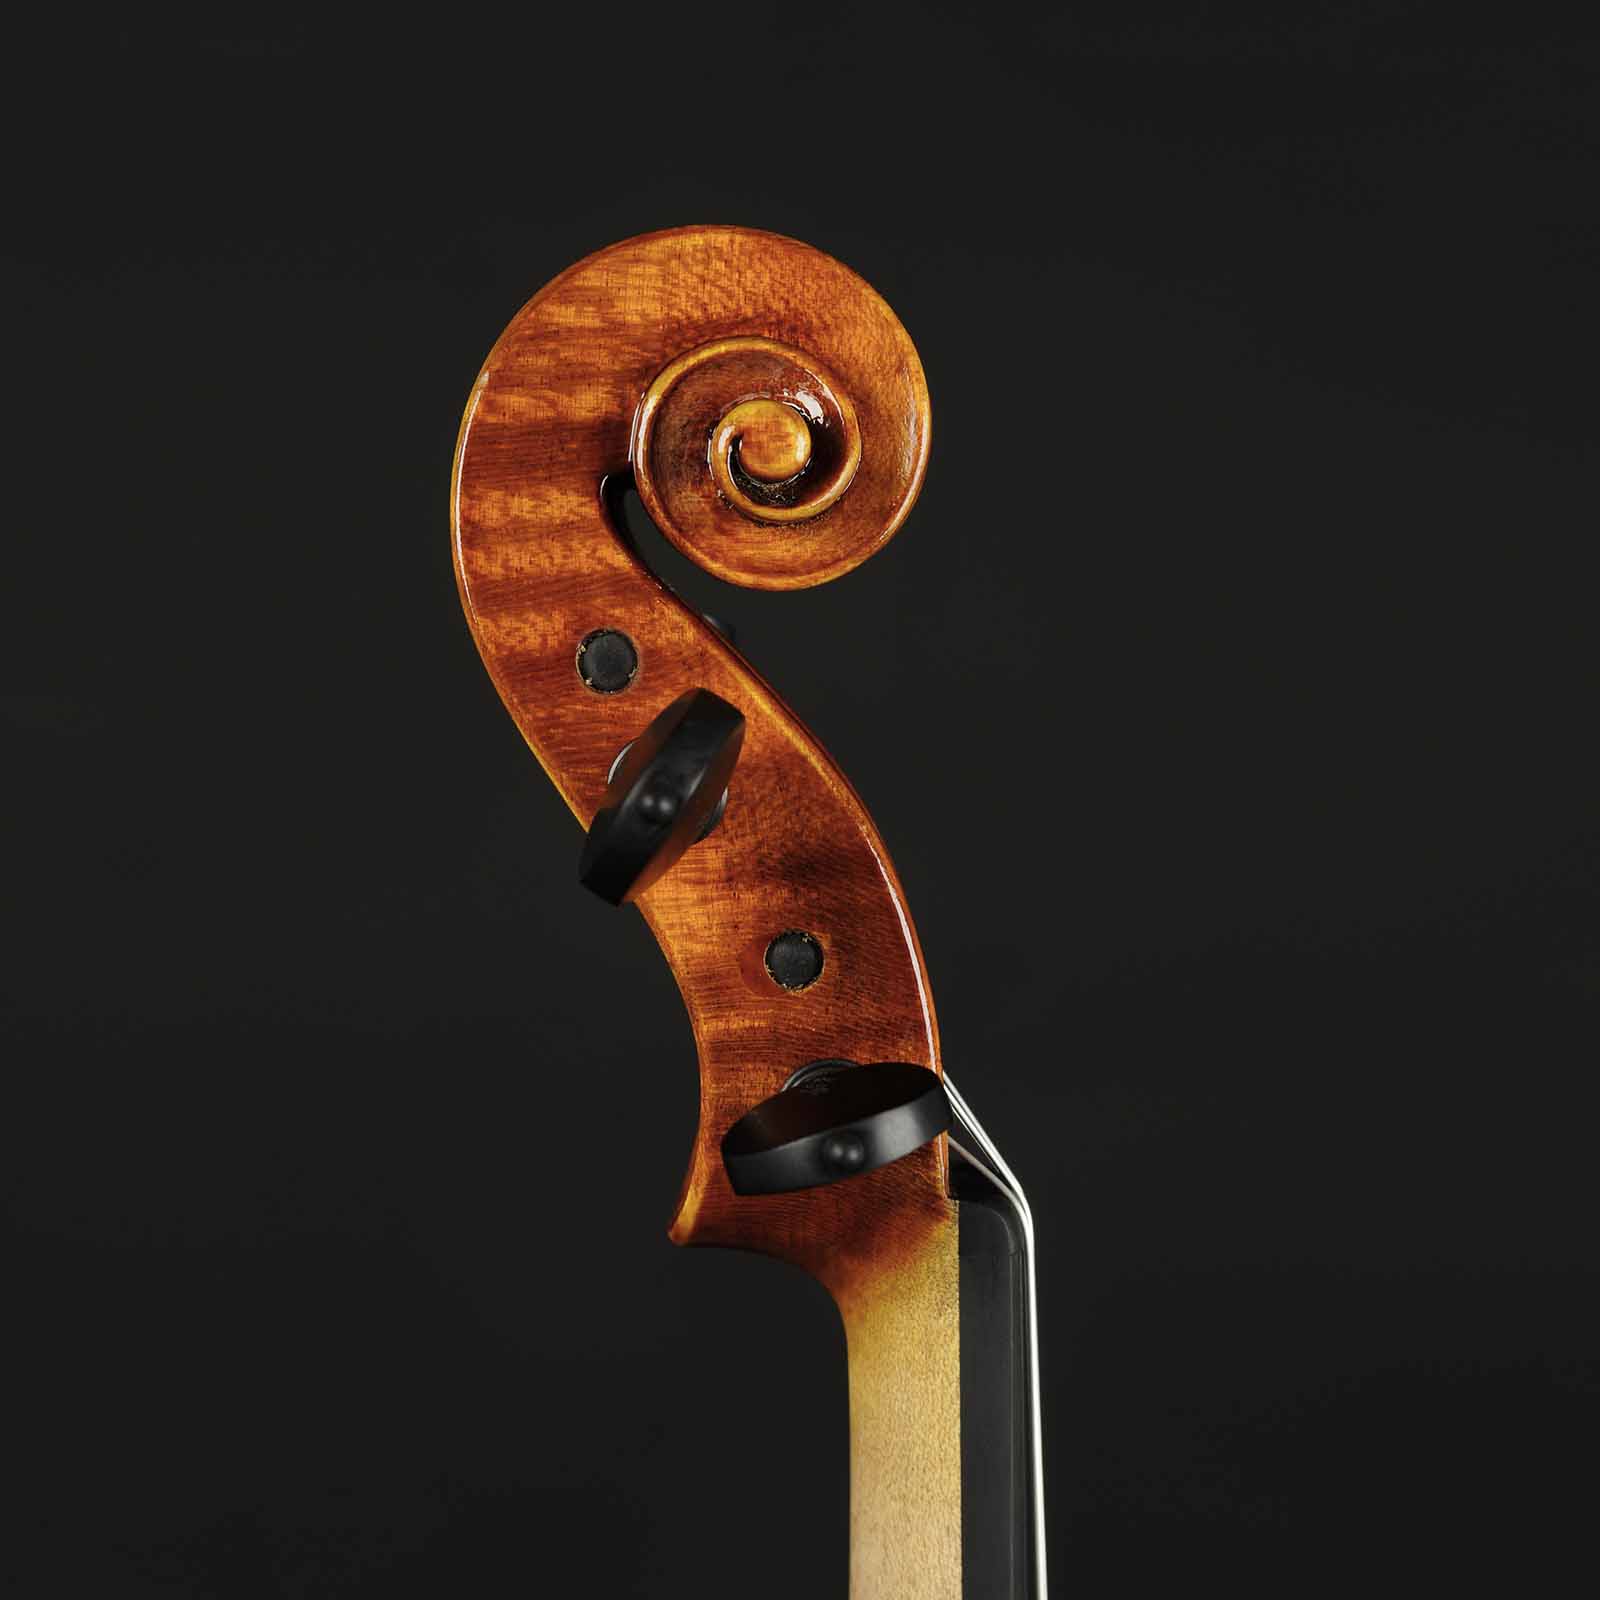 Antonio Stradivari Cremona 1720 “Santa Maria“ - Image 8